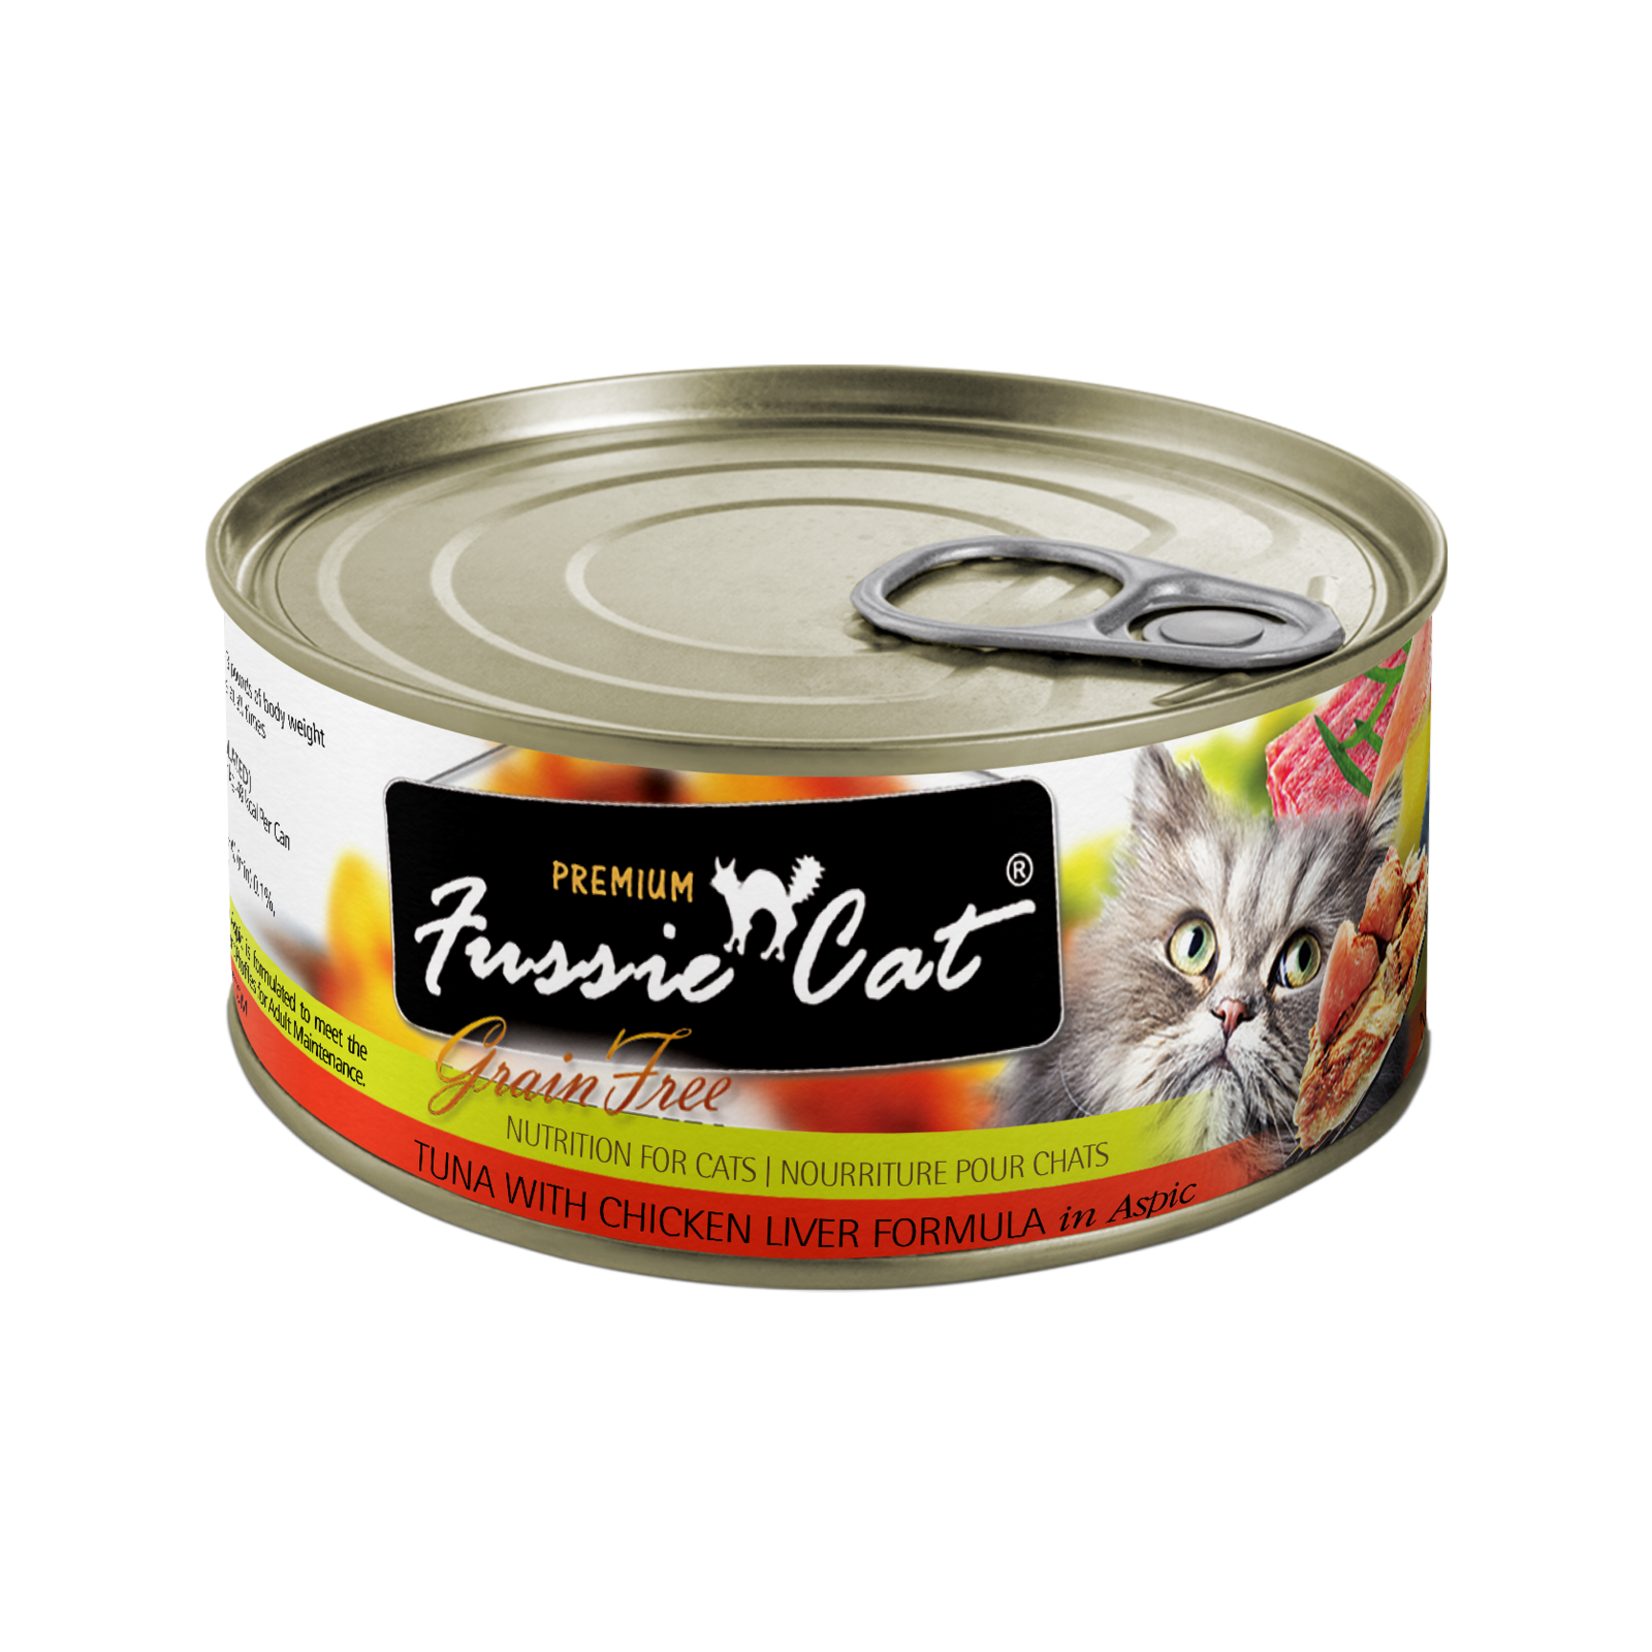 Fussie Cat Fussie Cat Premium - Grain Free Tuna with Chicken Liver Formula in Aspic for Cats